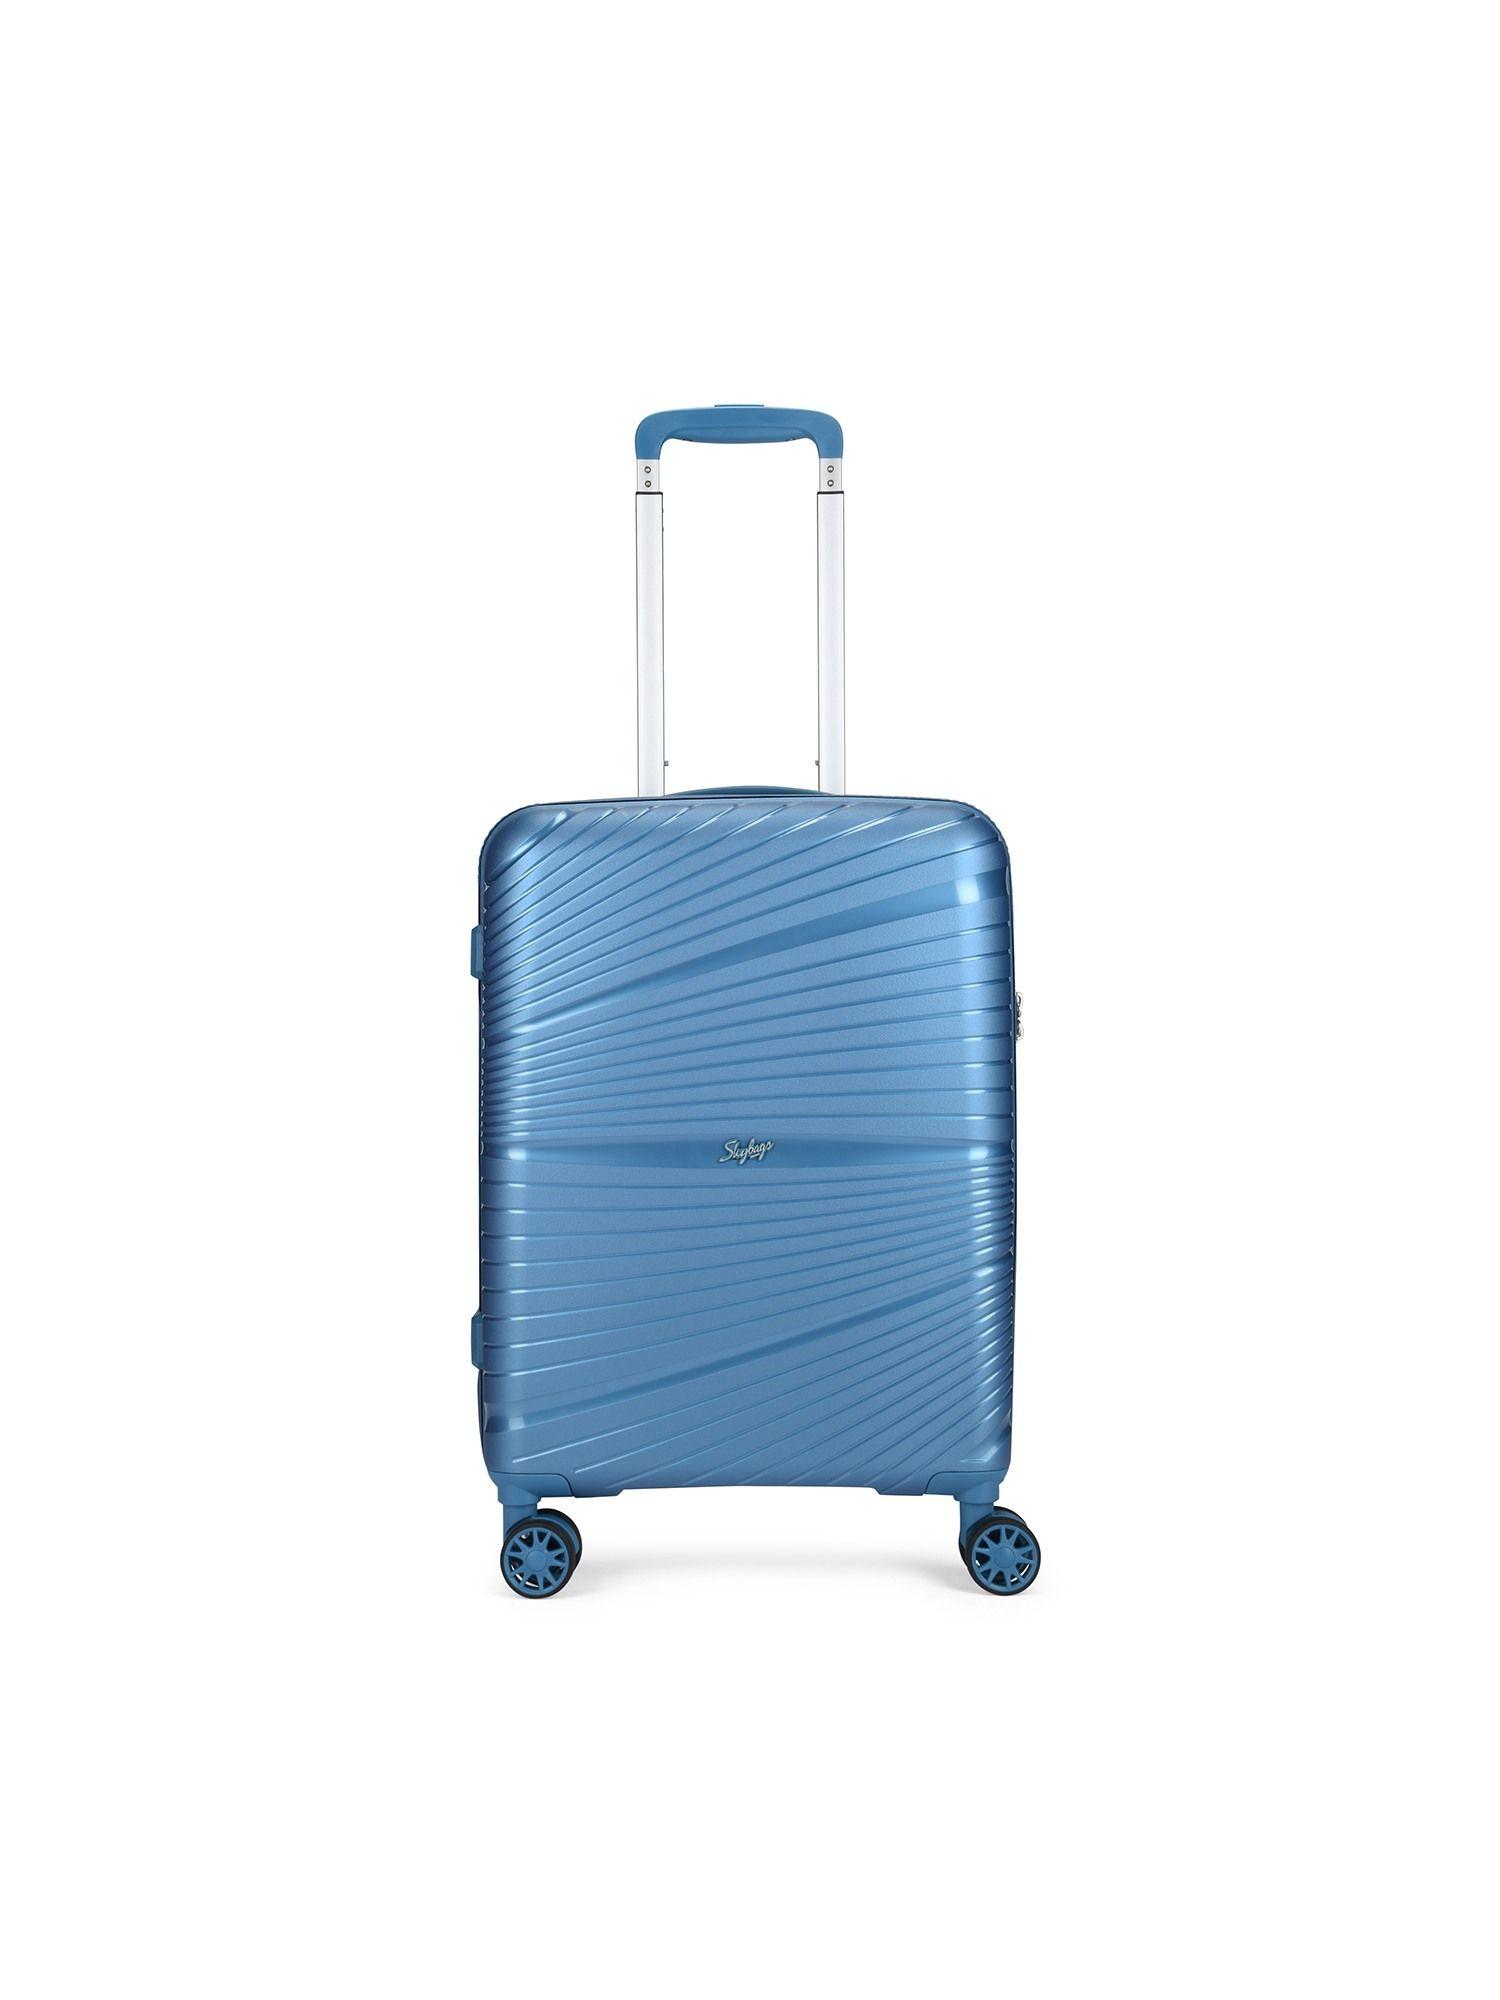 skylite blue hard luggage 8-wheel suitcase cabin trolley bags